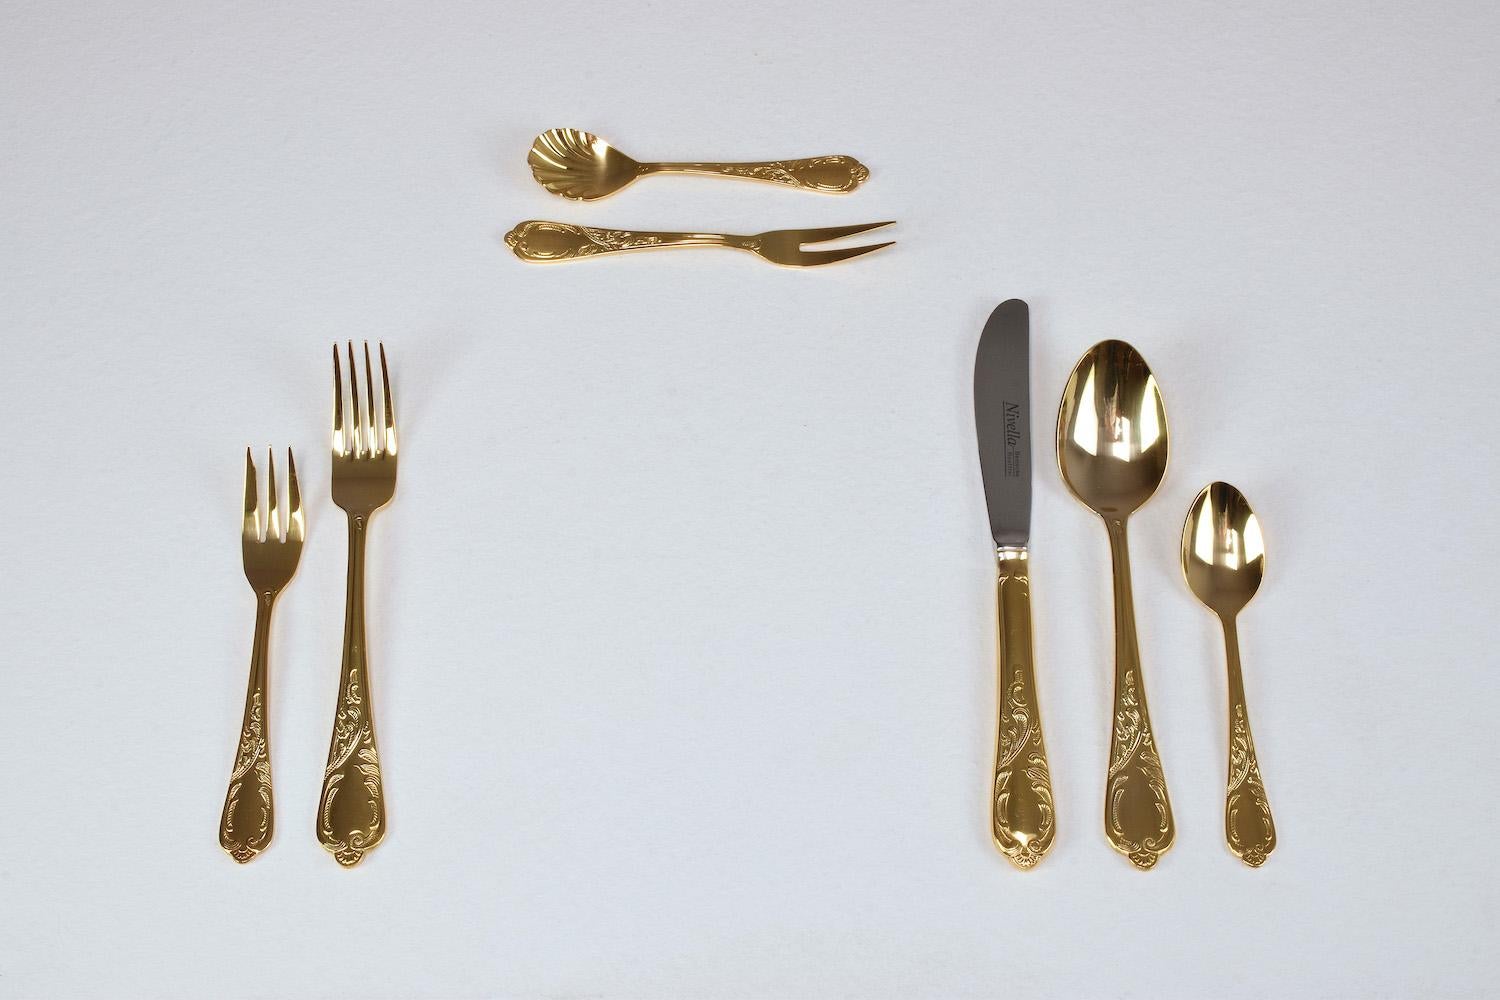 24 Karat 11 Pers, Flatware Cutlery Set by Nivella Solingen 2